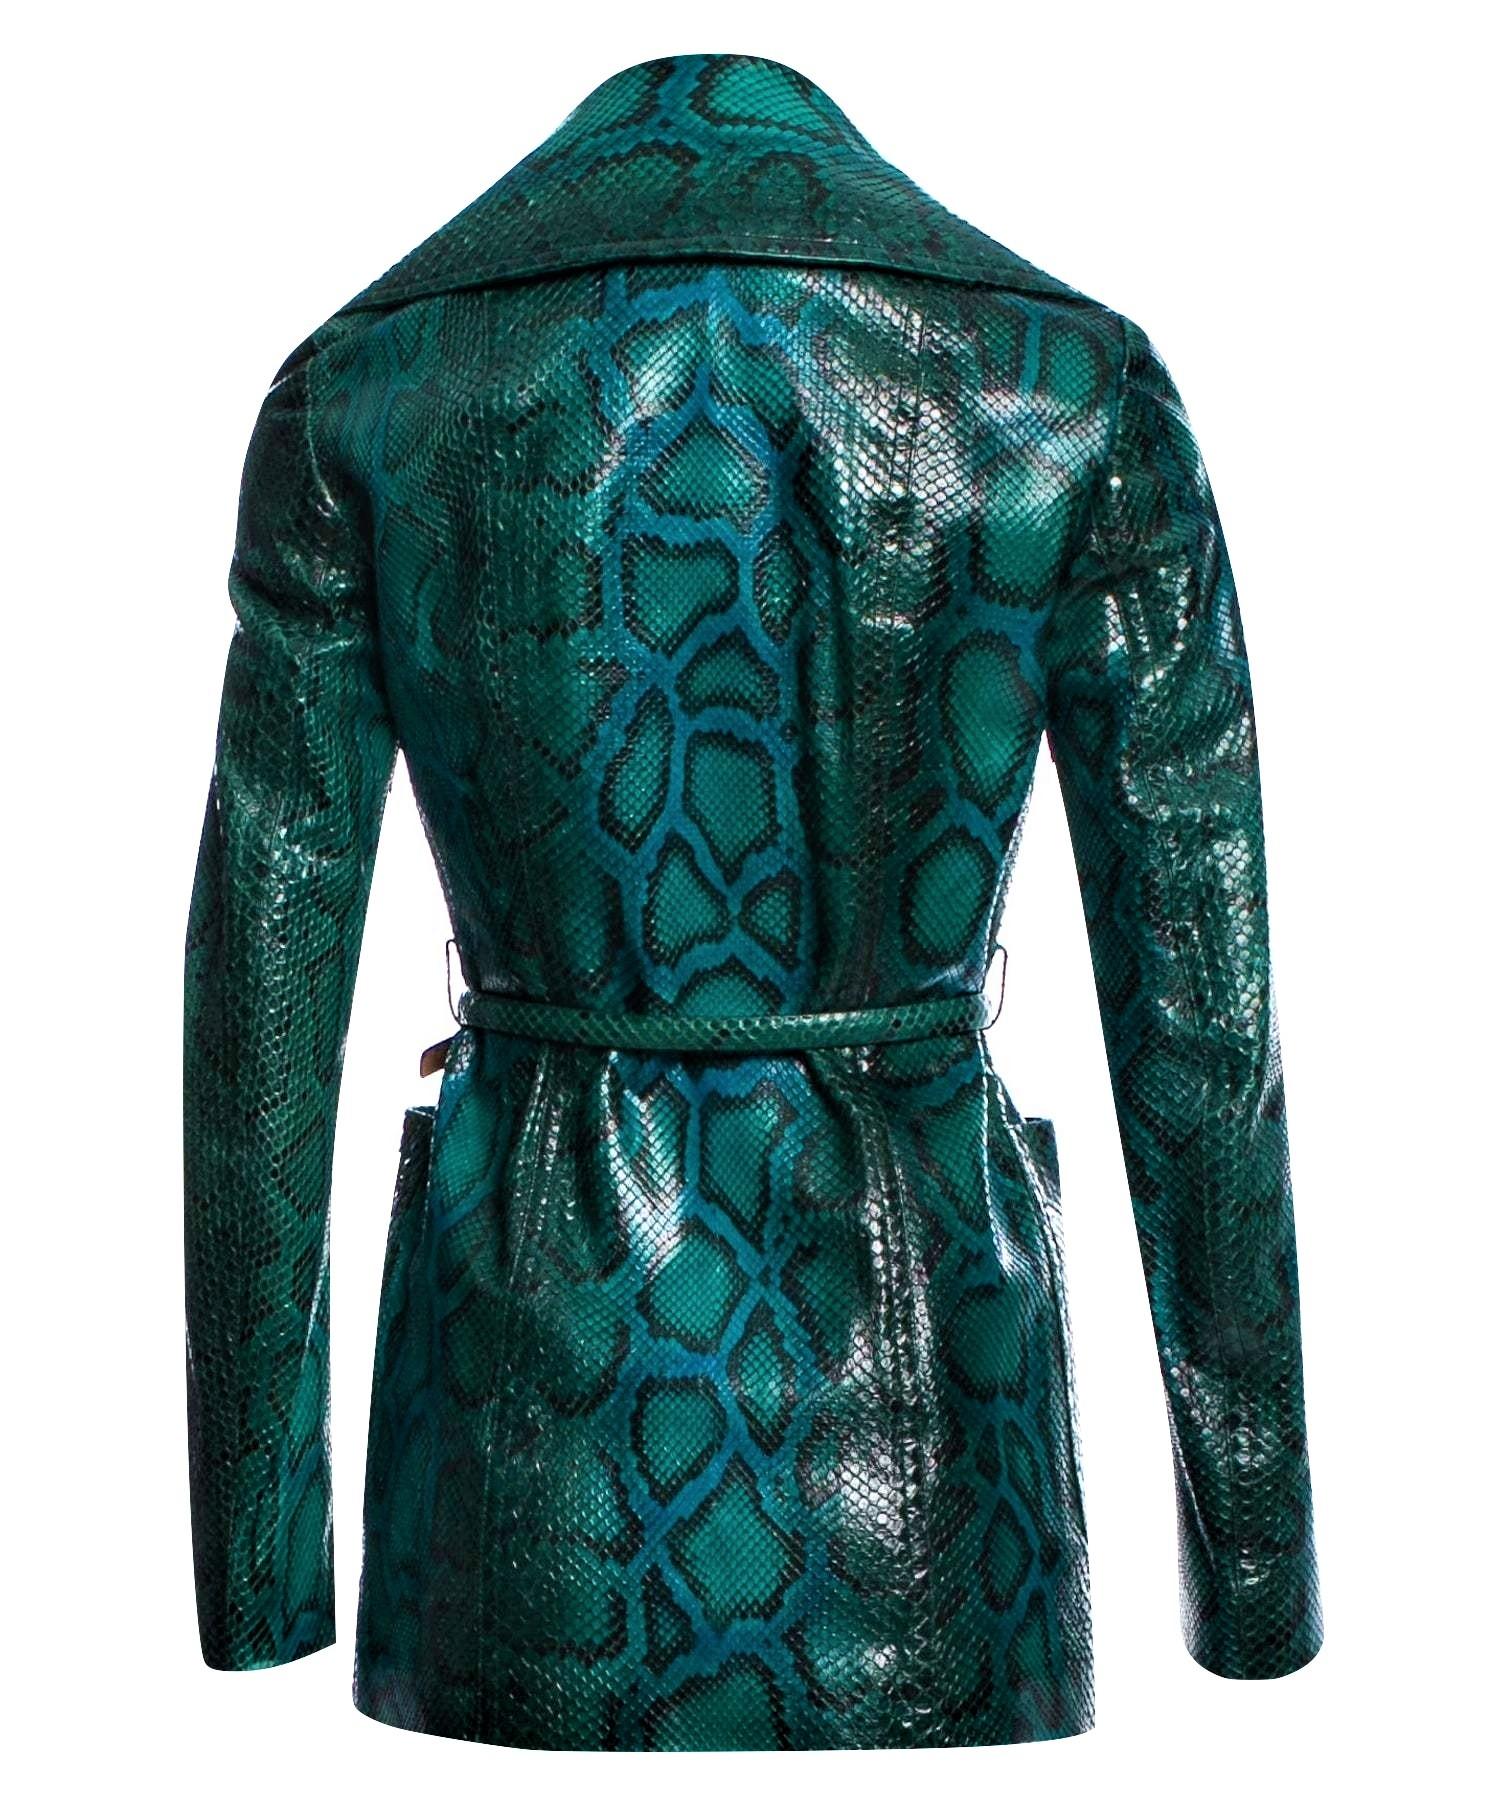 New Rare Gucci 90th Anniversary Python Snakeskin Jacket Gaga Coat Blazer $14, 650 5